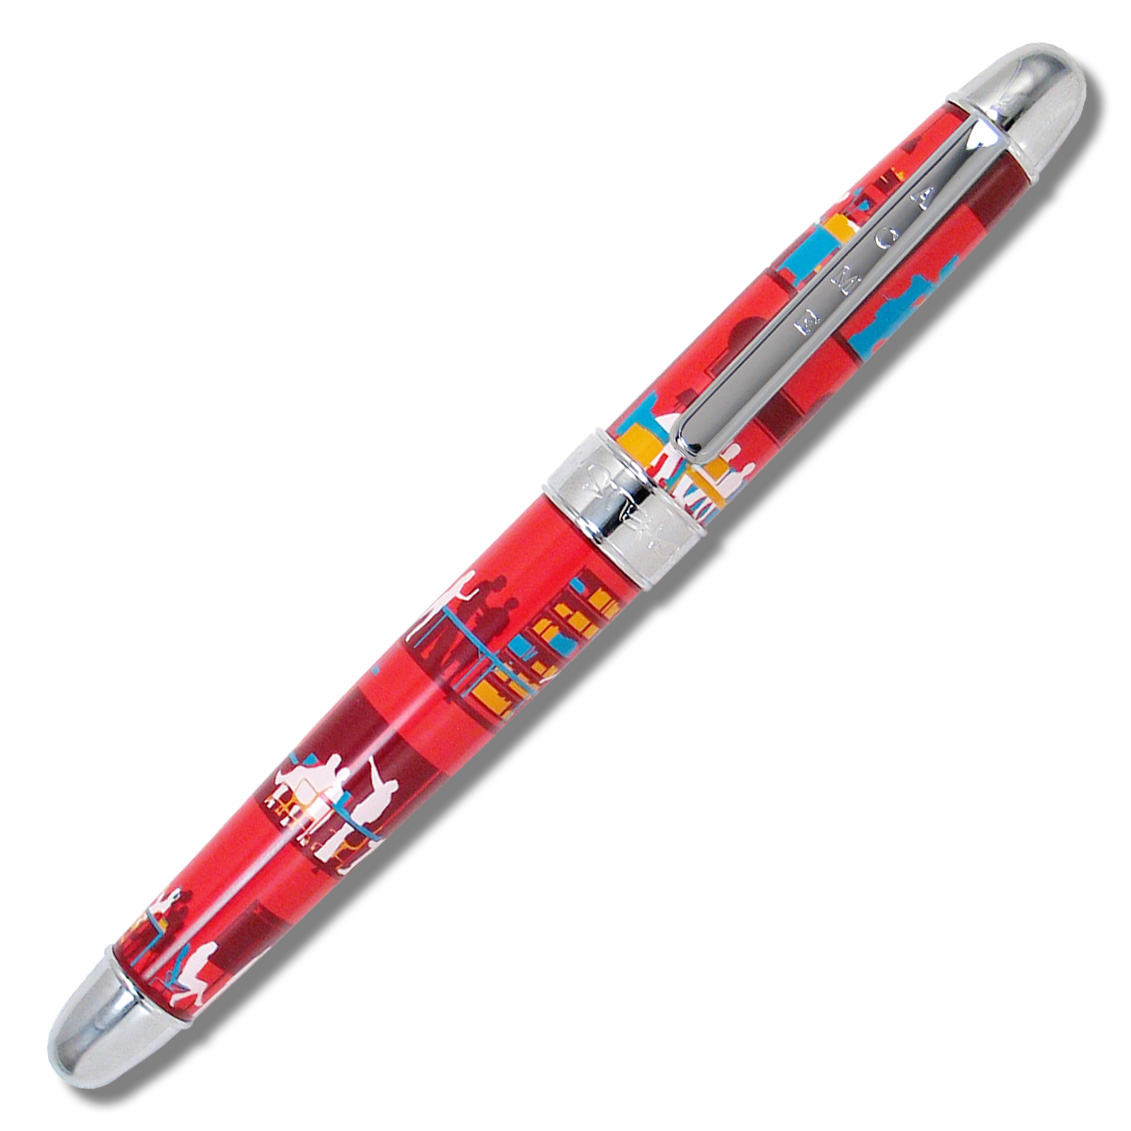 Acme PMS01R Dollhaus Roller Ball Pen